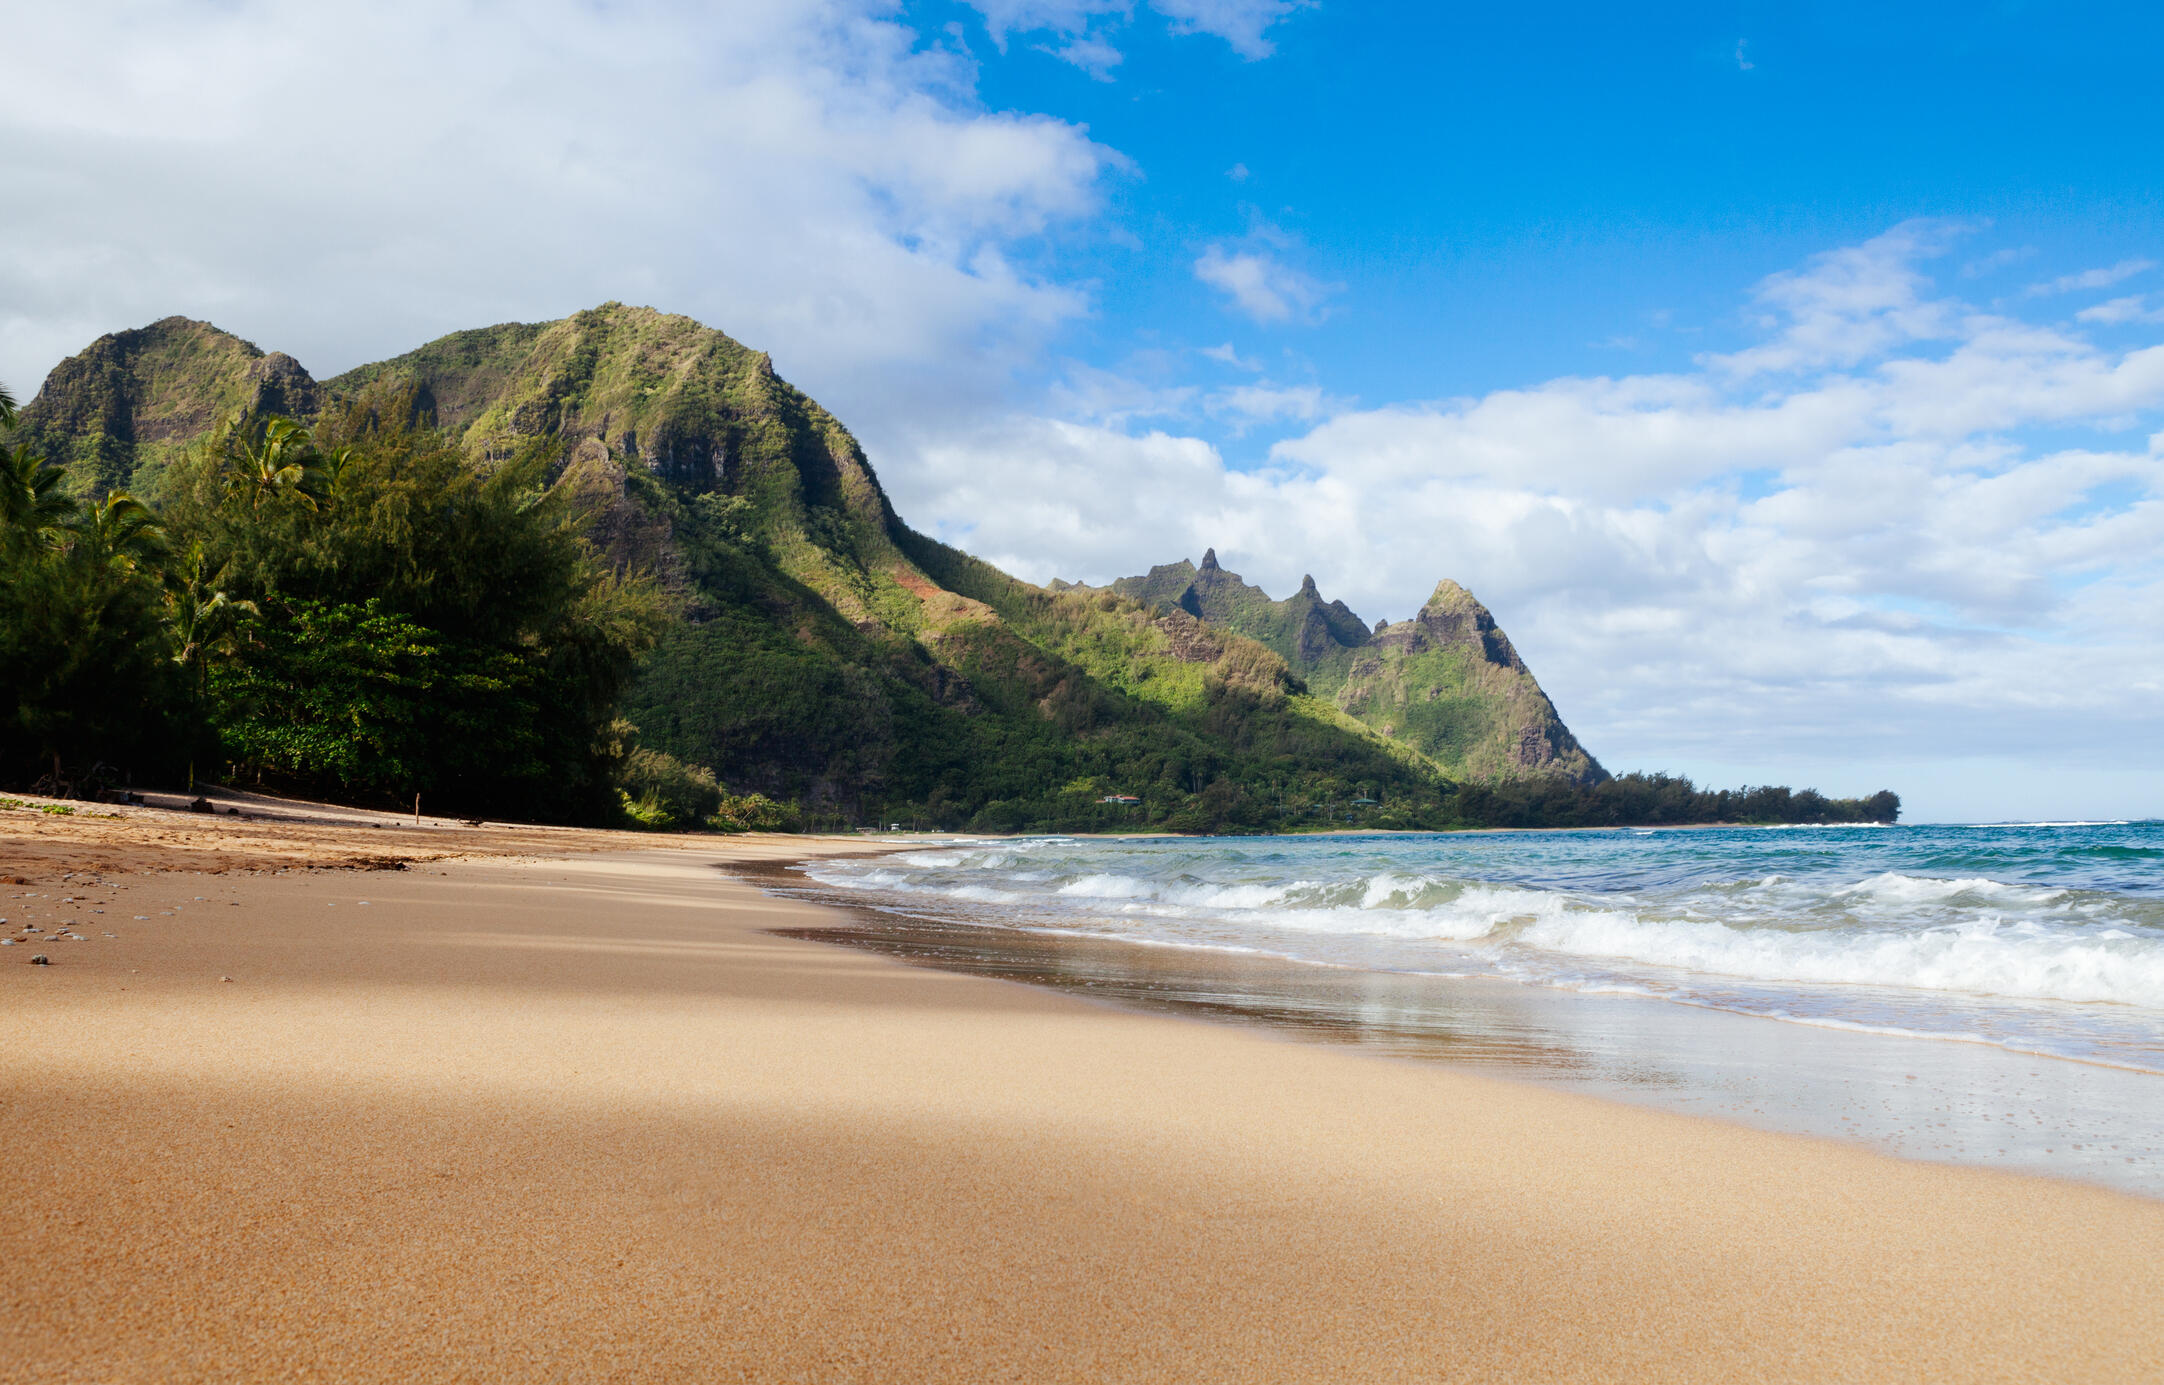 tunnels beach and bali hai point on the north shore of Kauai, Hawaii, usa. resort destination